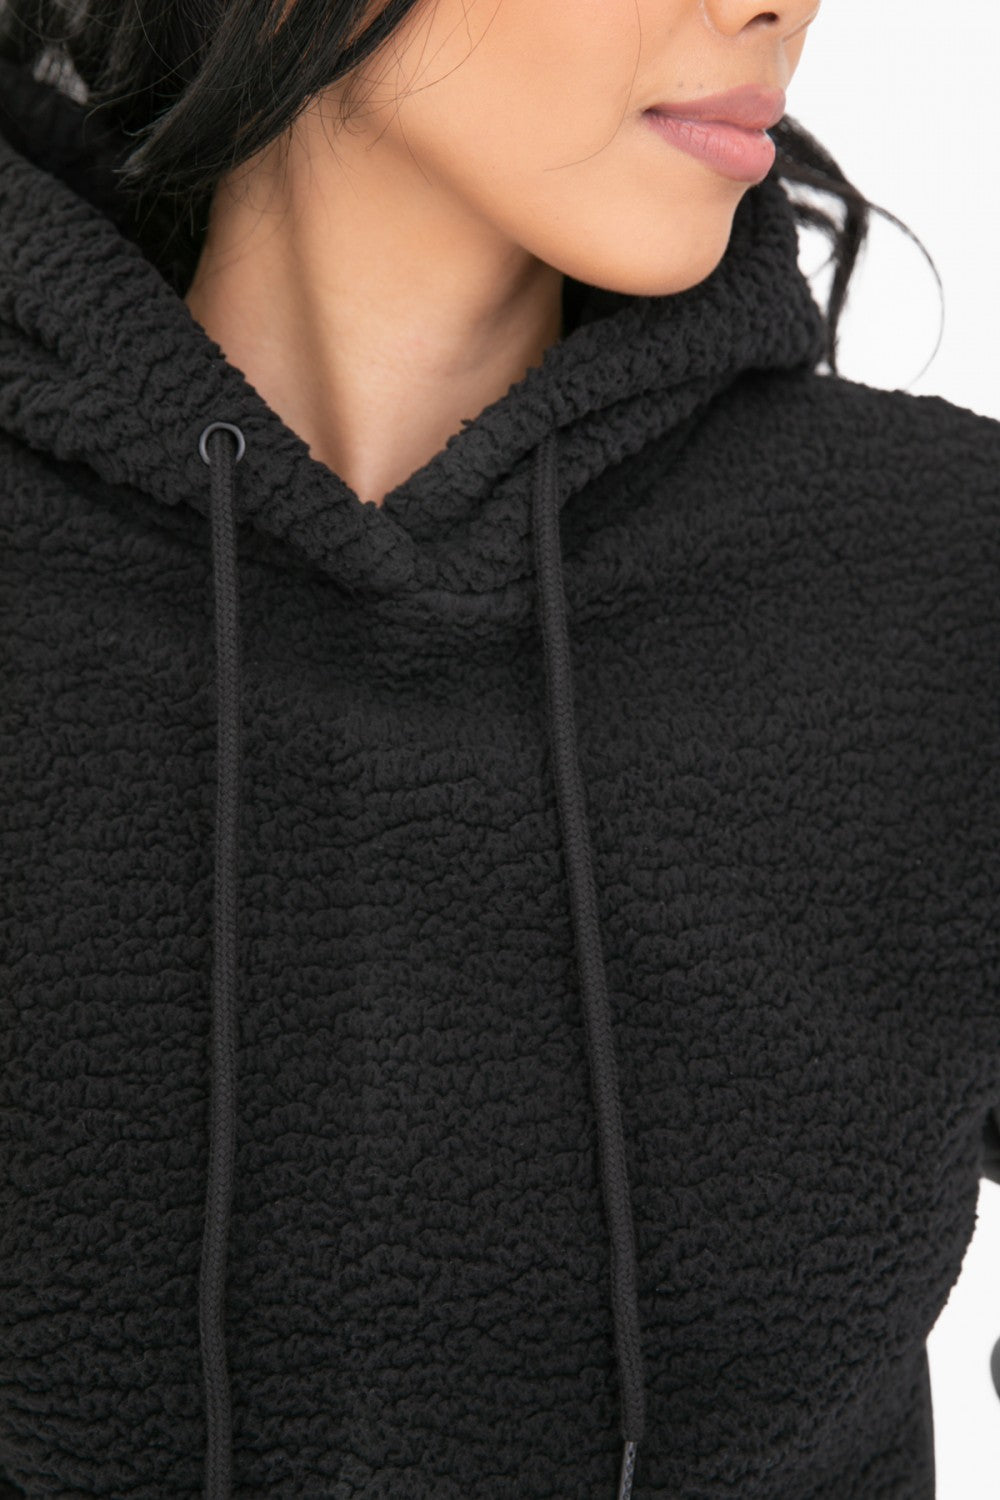  Lady Sherpa Pullover Sweatshirt